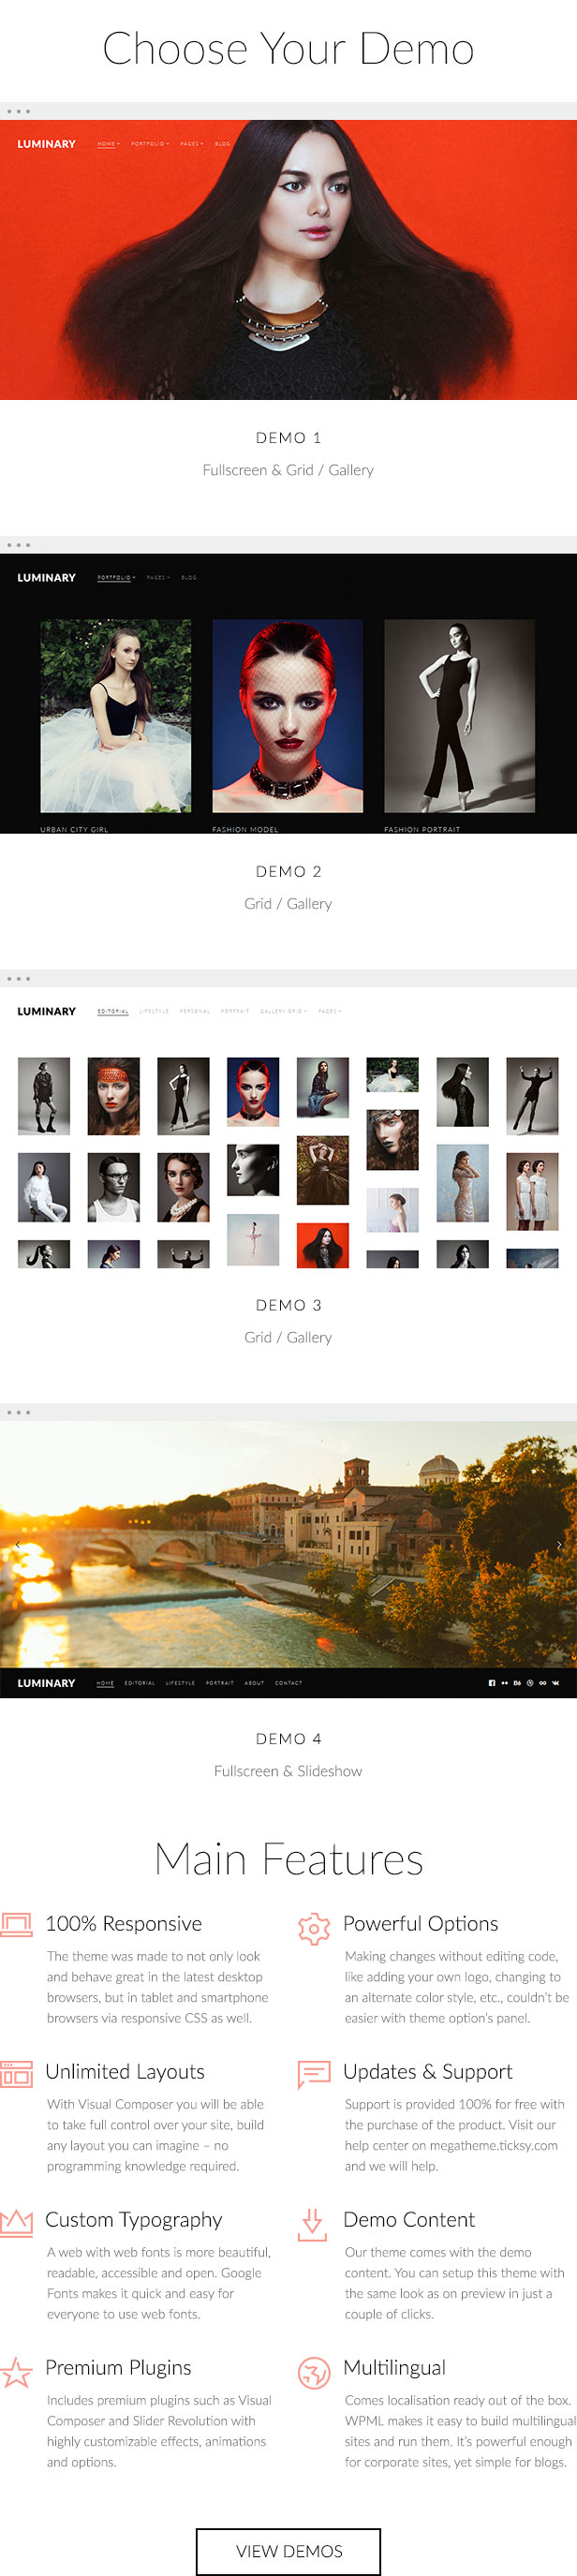 Luminary - Portfolio / Photography WordPress Theme - 1